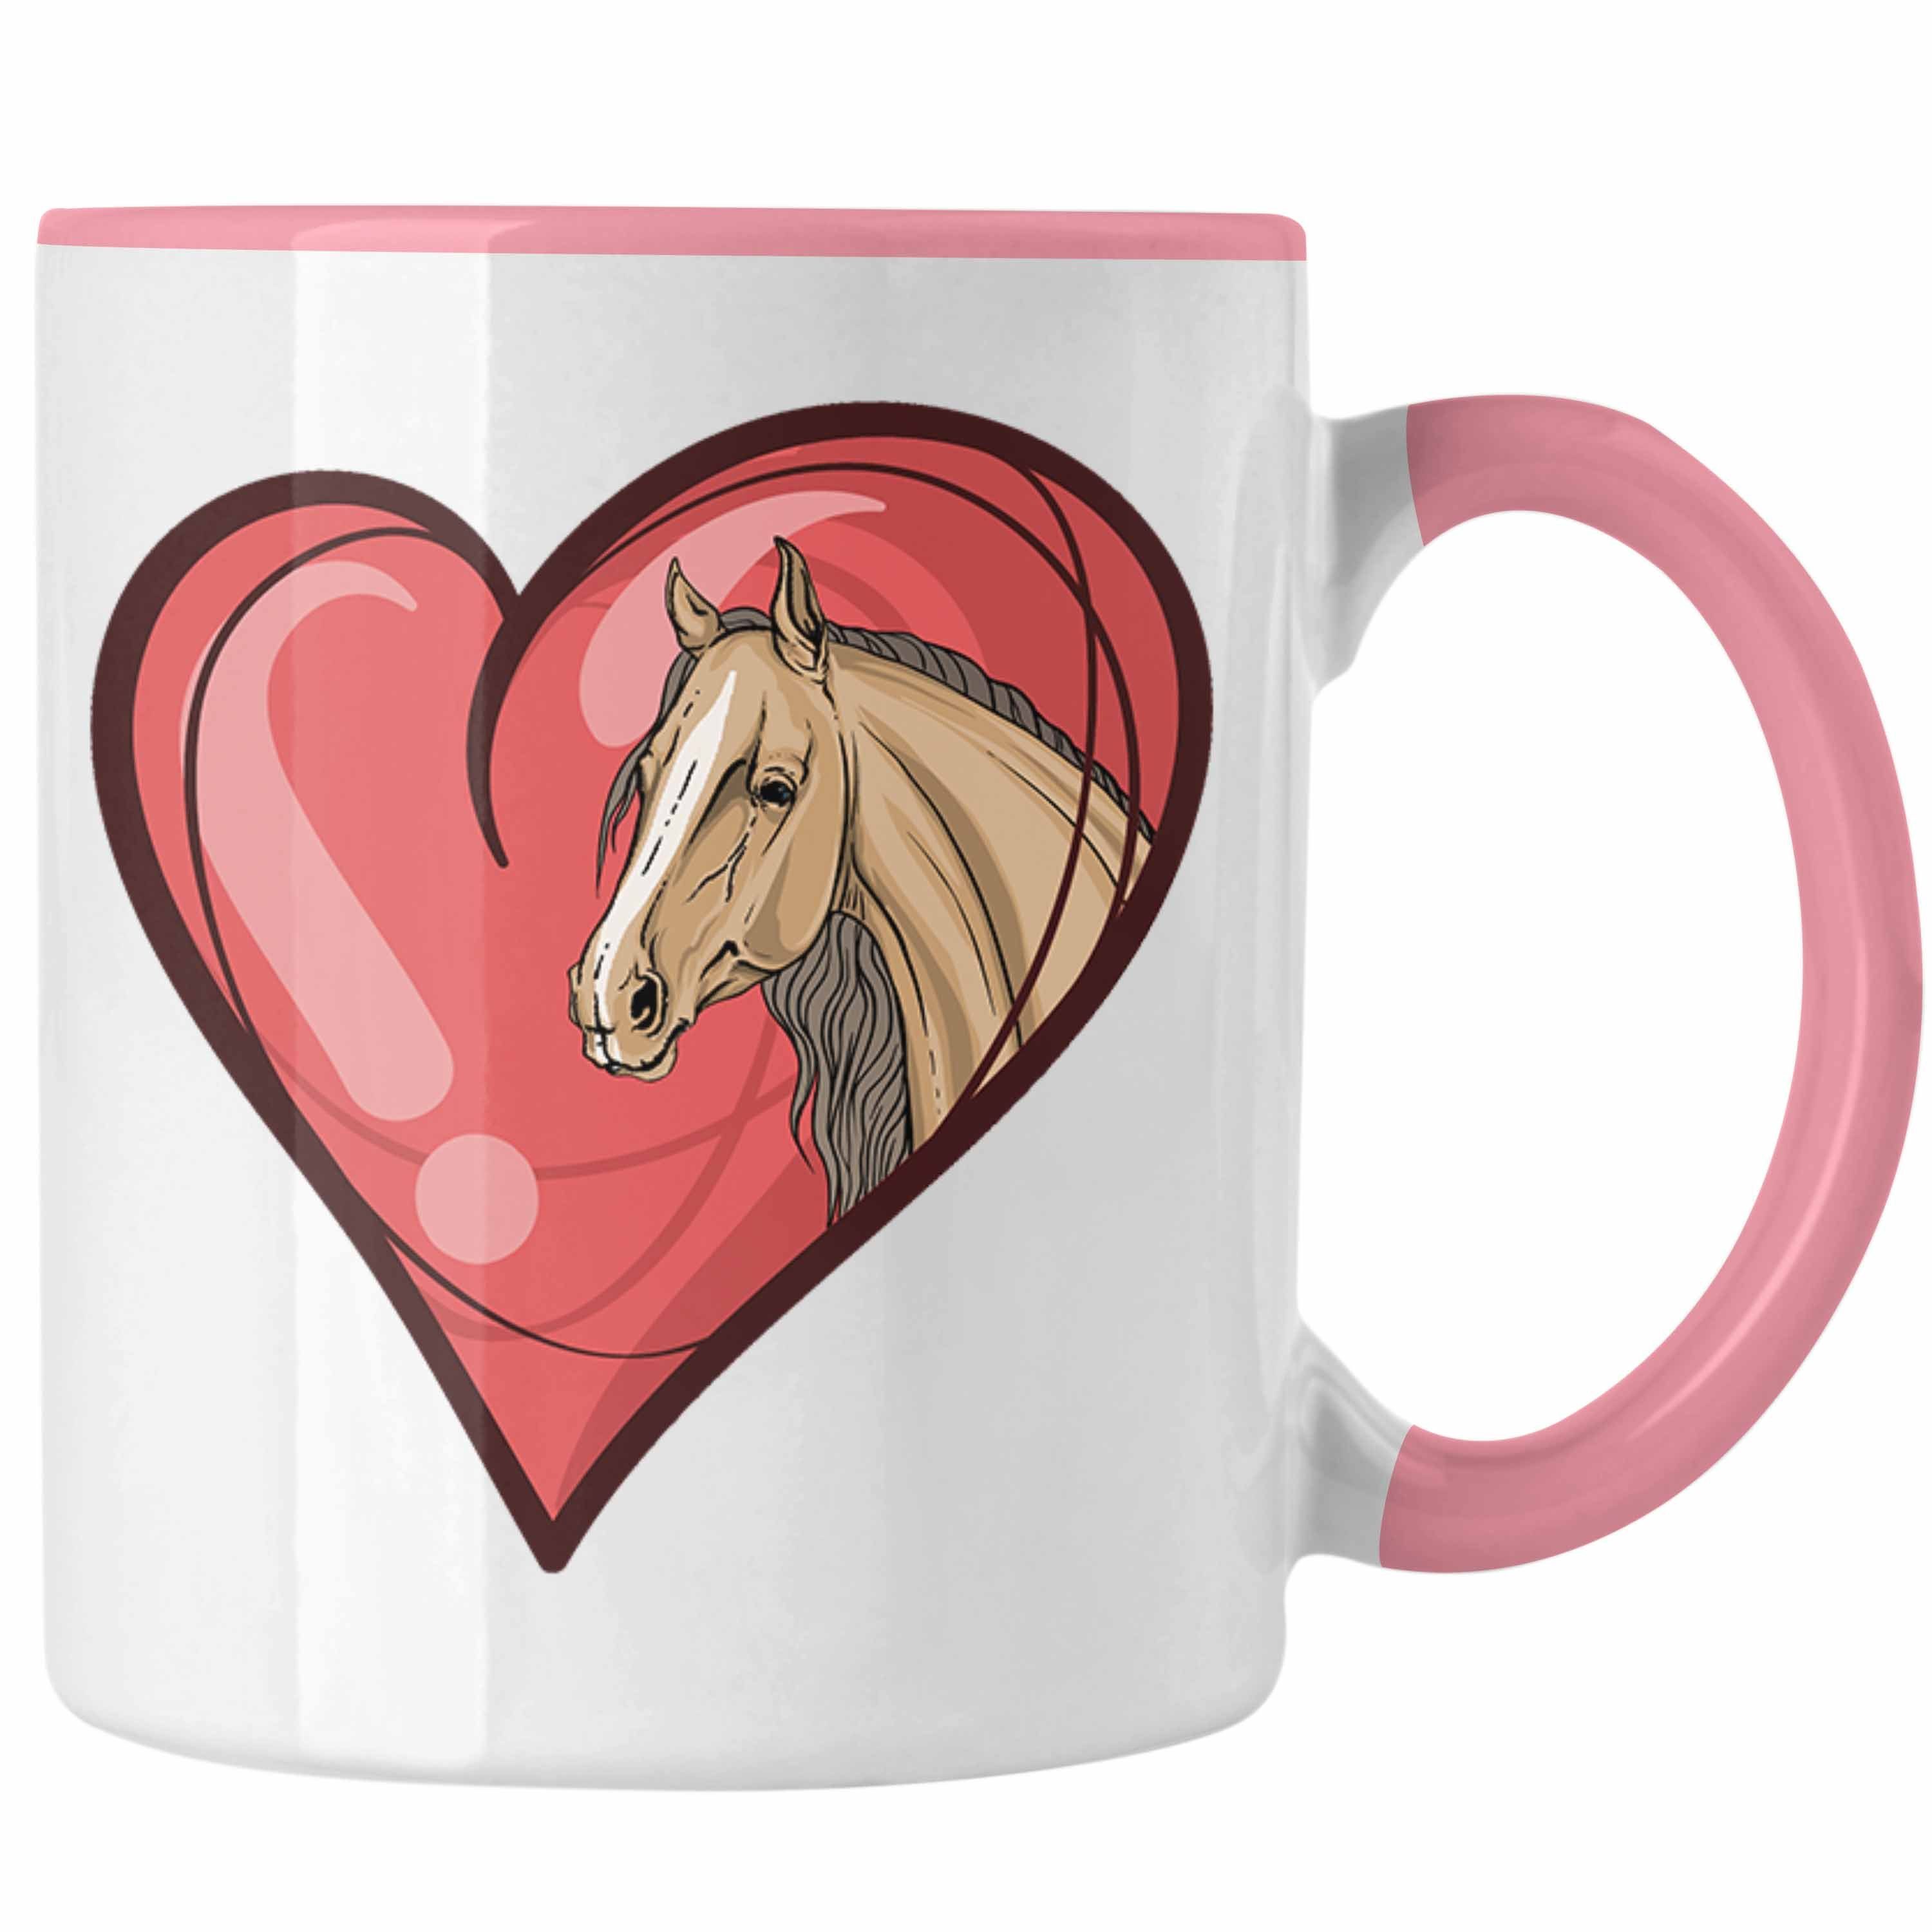 Trendation Pferde Lustig Geschenk Rosa Tasse Tasse Grafik